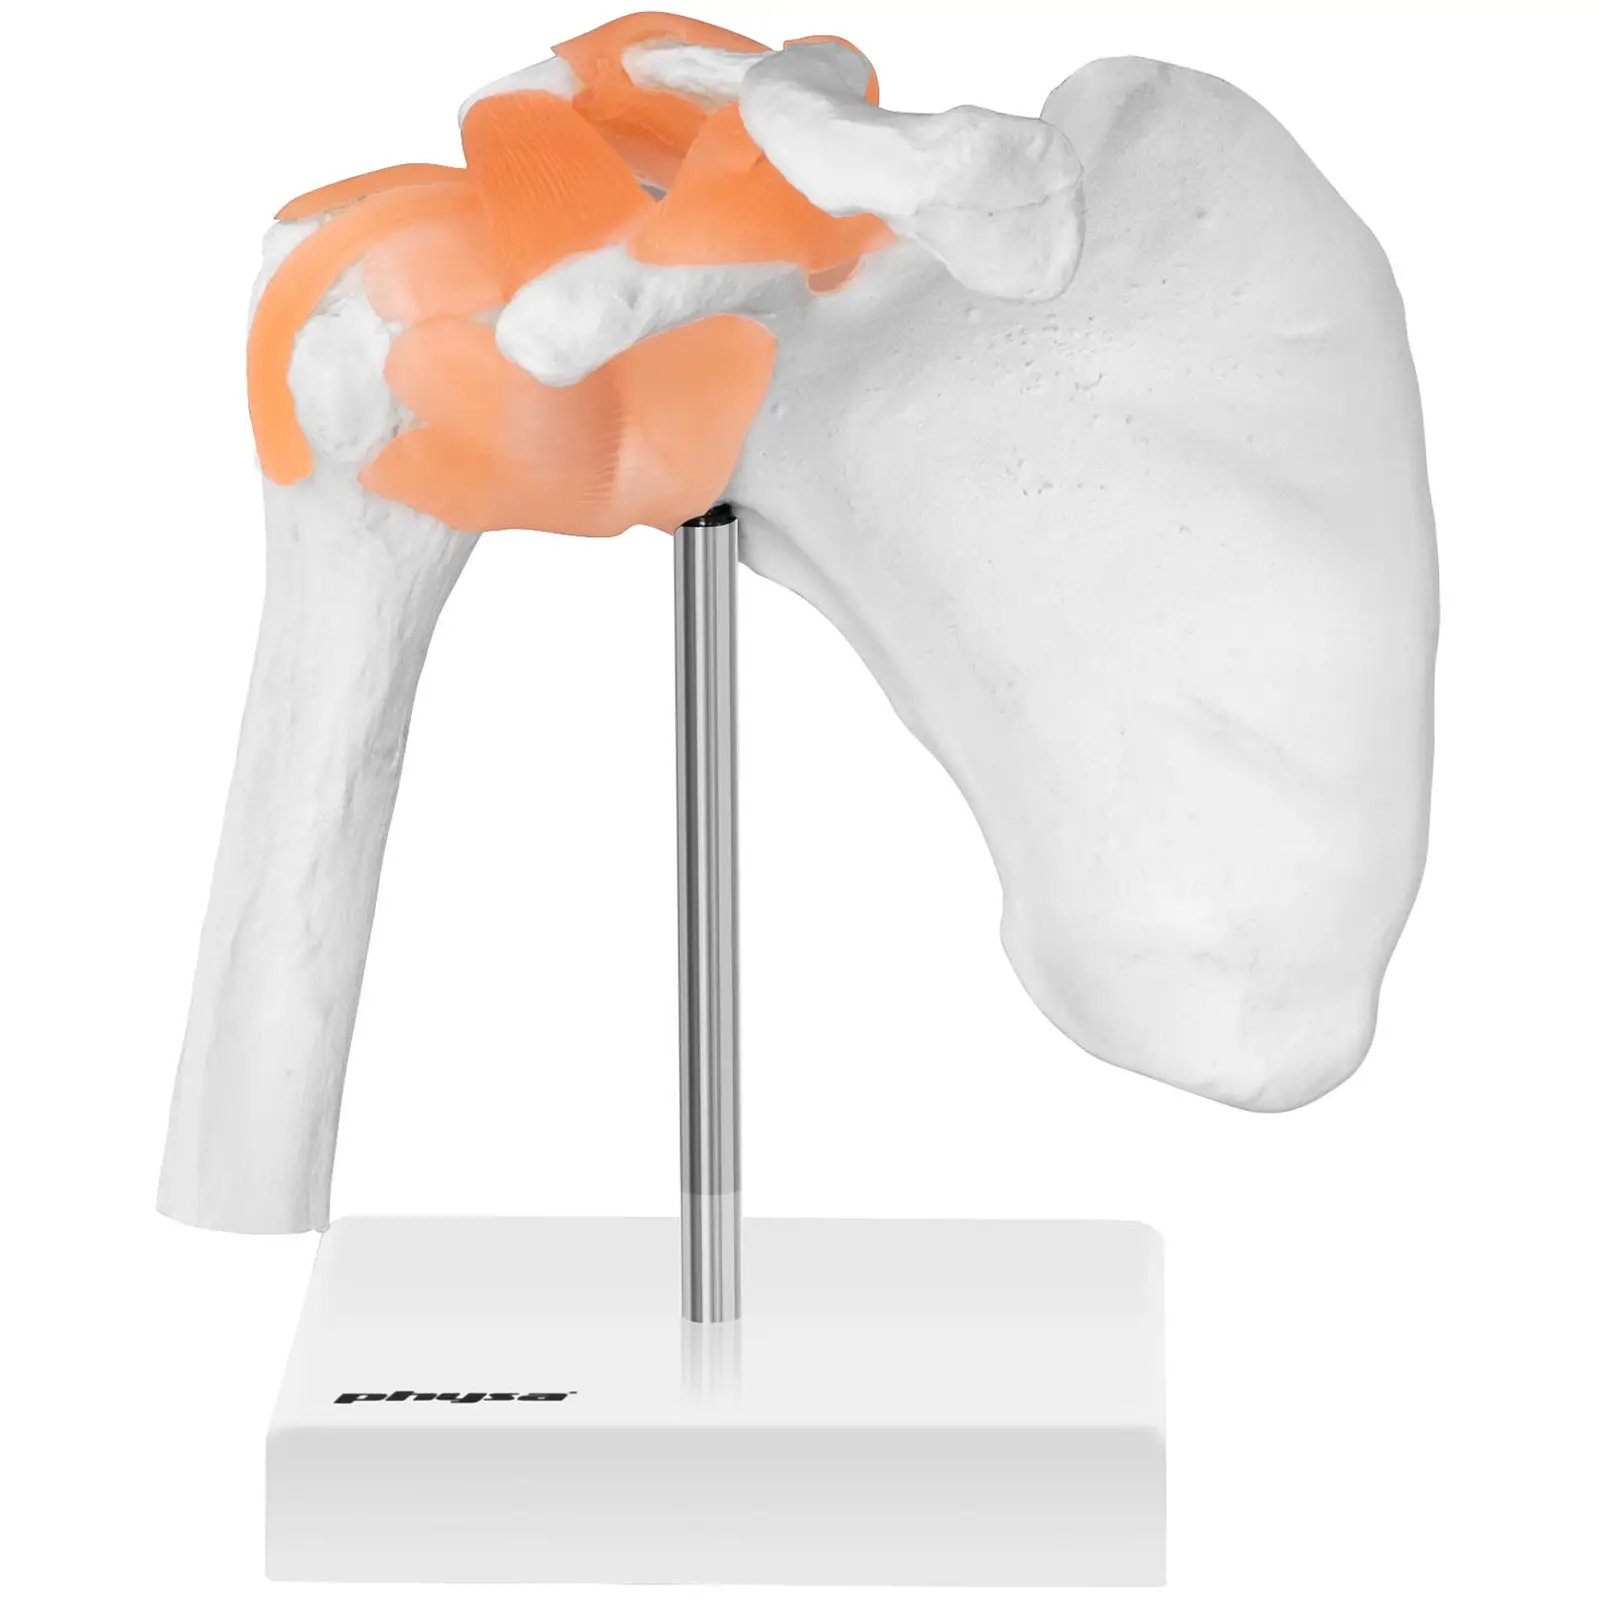 Skulderledd – Anatomisk modell